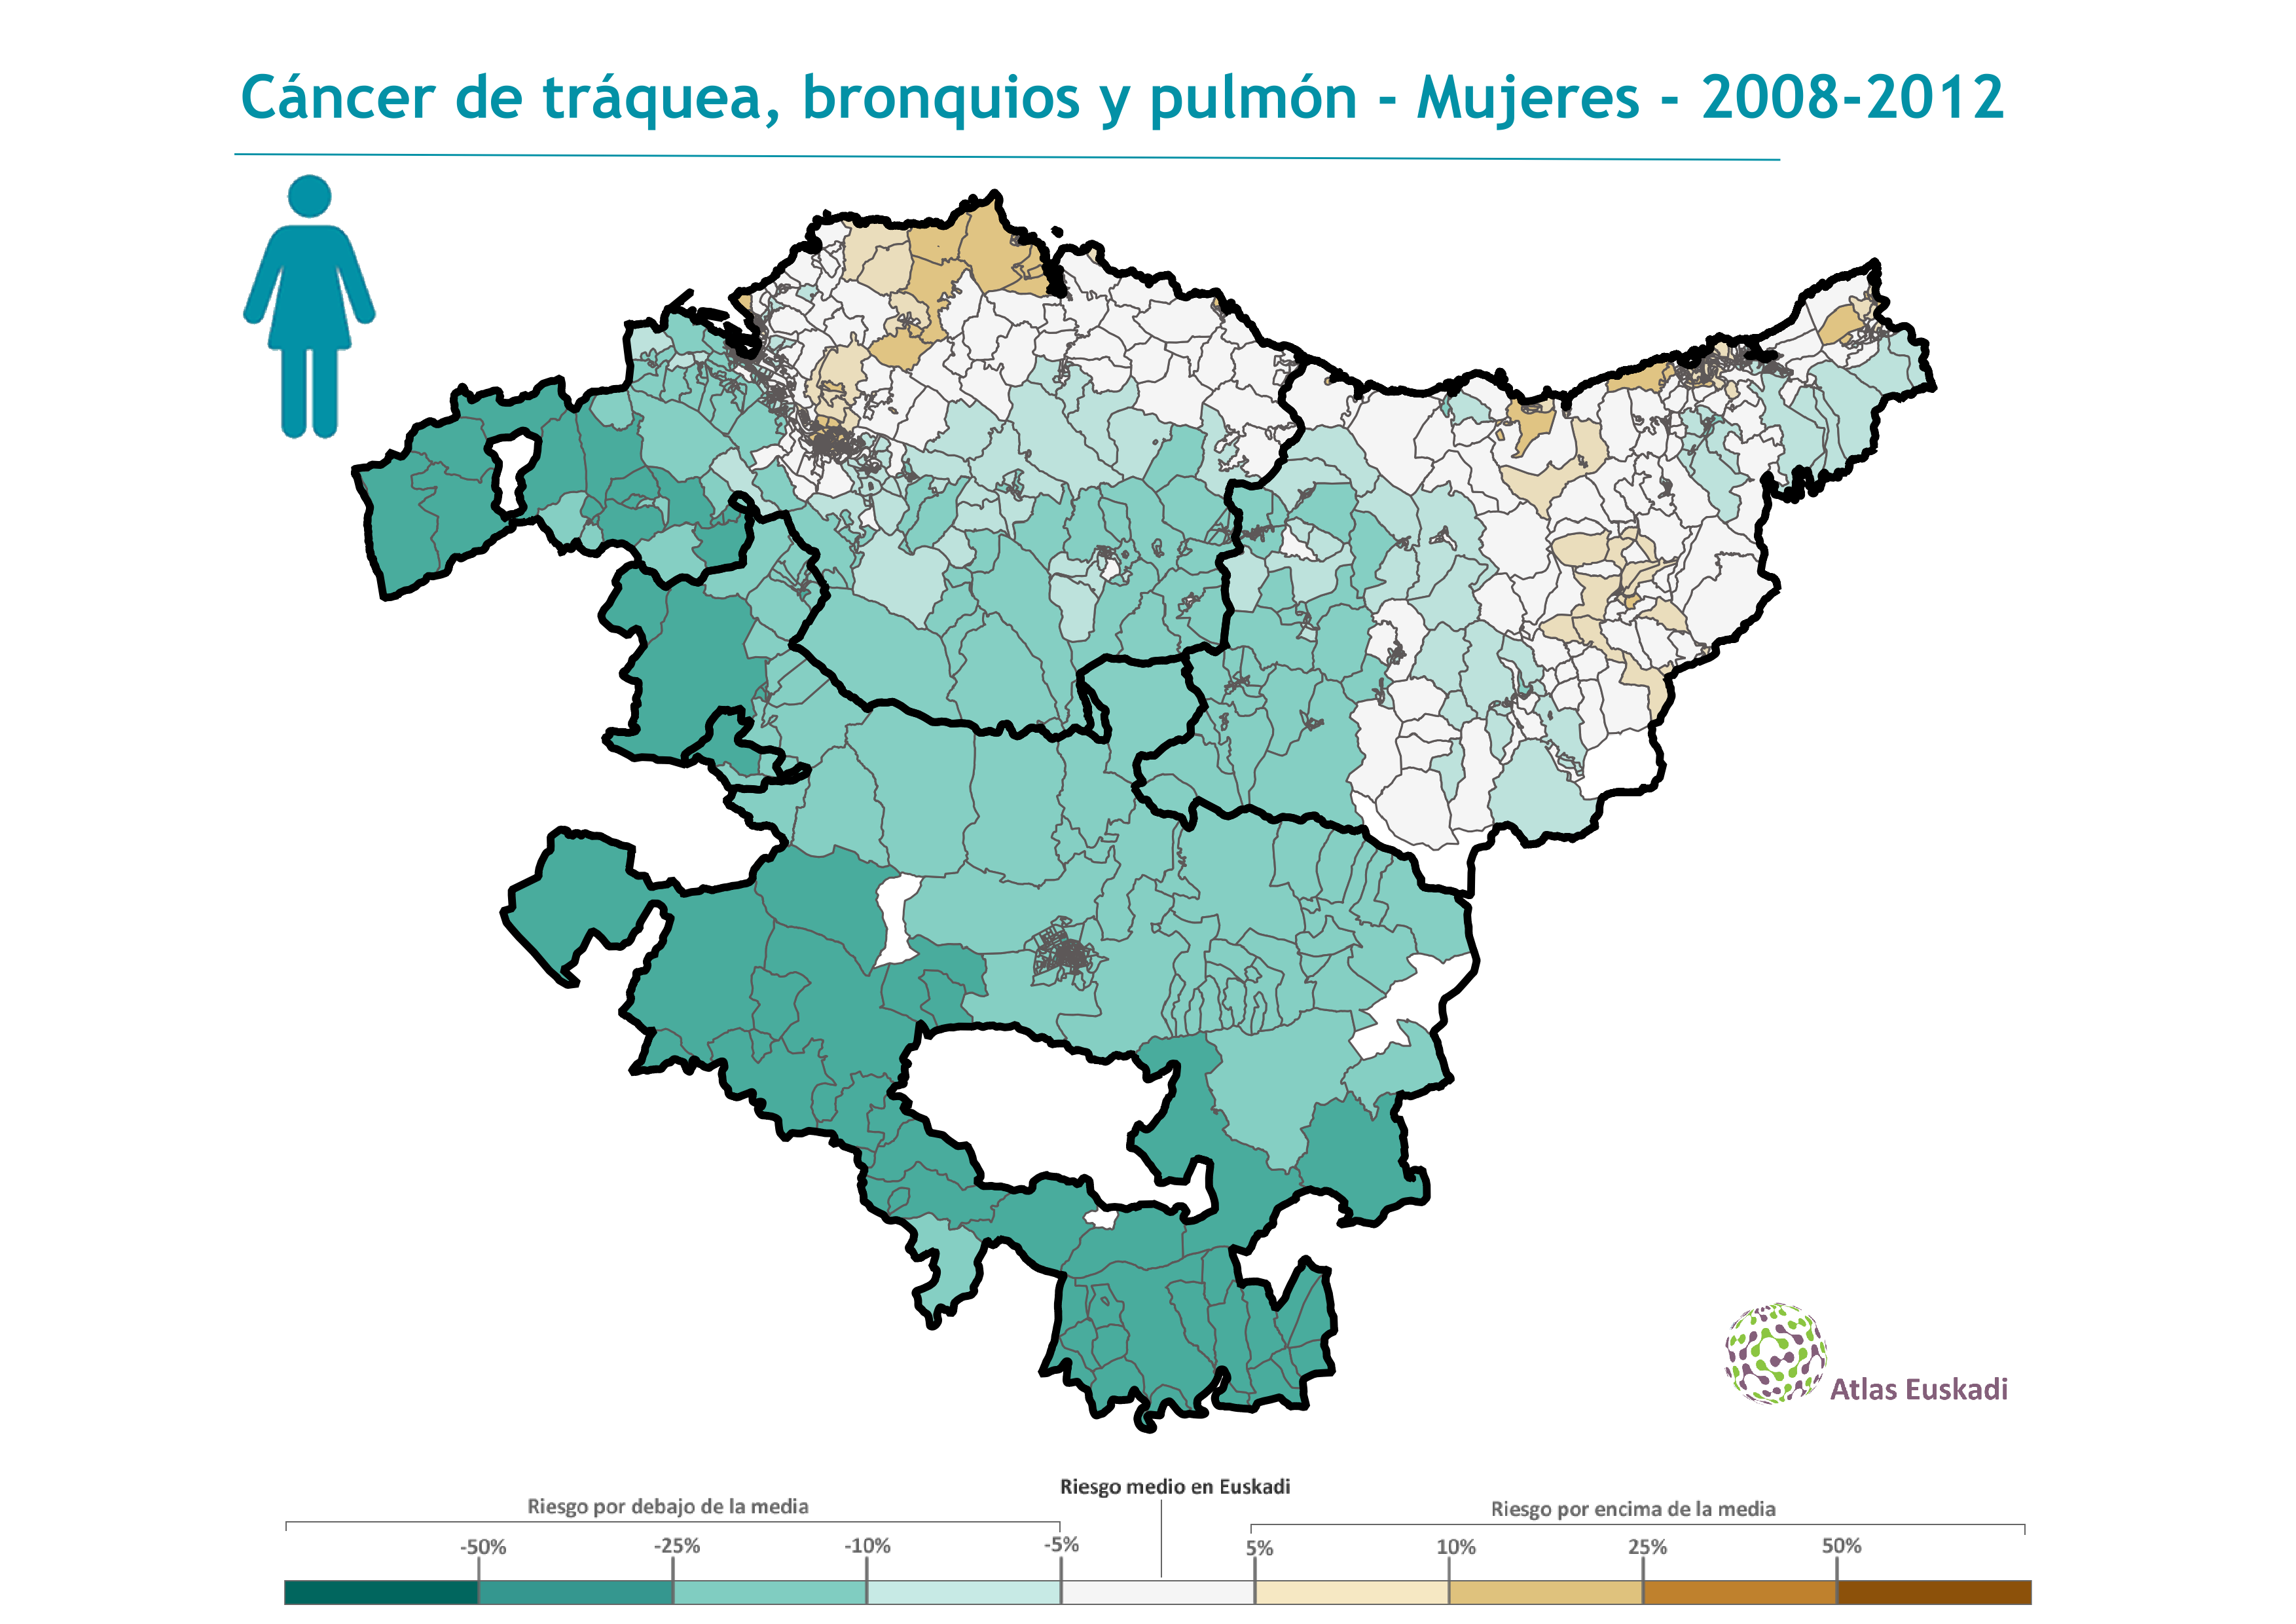 Cáncer de tráquea, bronquios y pulmón mujeres  2008-2012 Euskadi